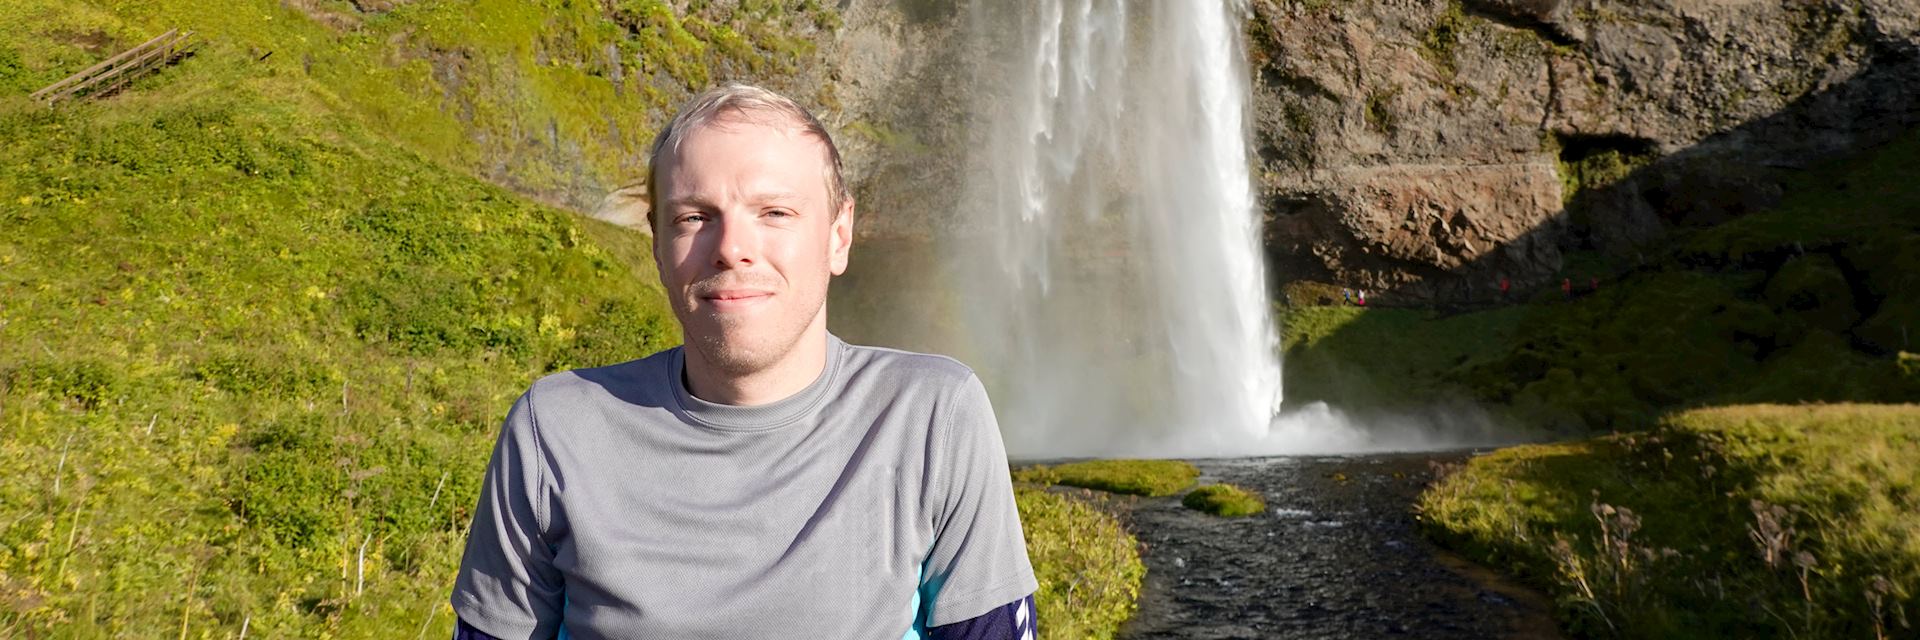 Ian at Seljalandsfoss waterfall